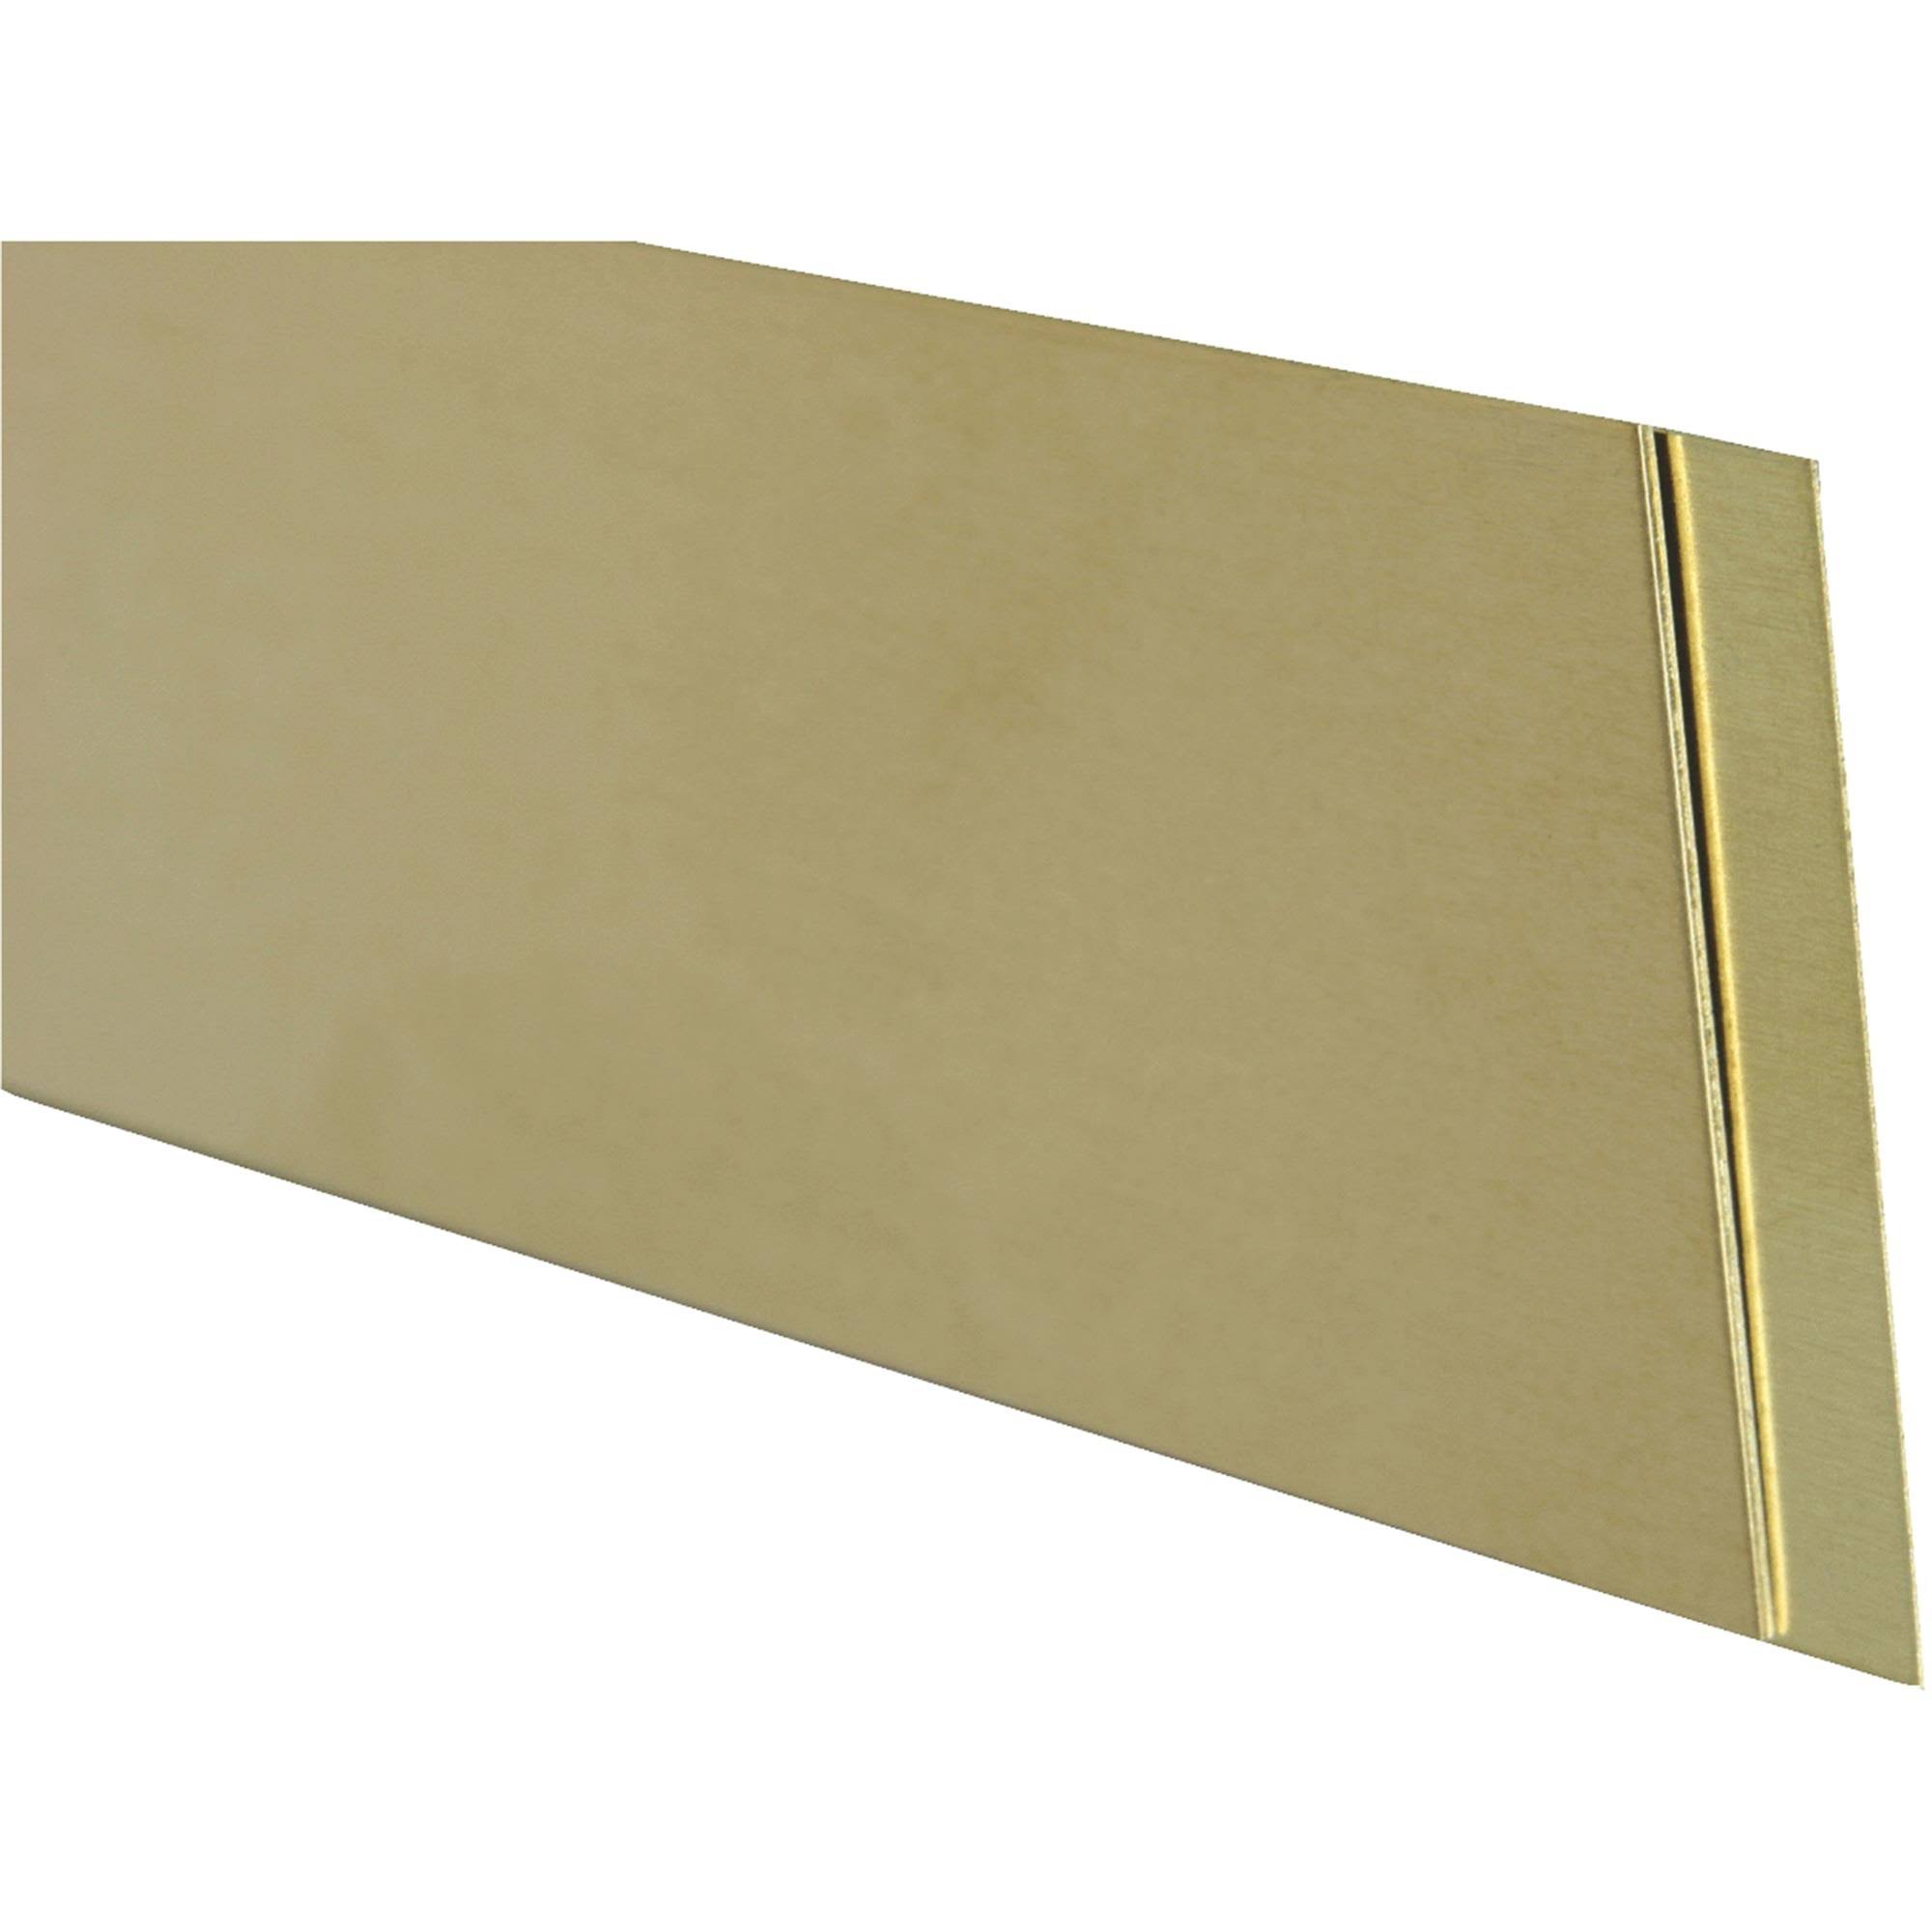 K & S Precision Metals 8244 Brass Strip - 0.032 inch x 2 inch x 12 inch